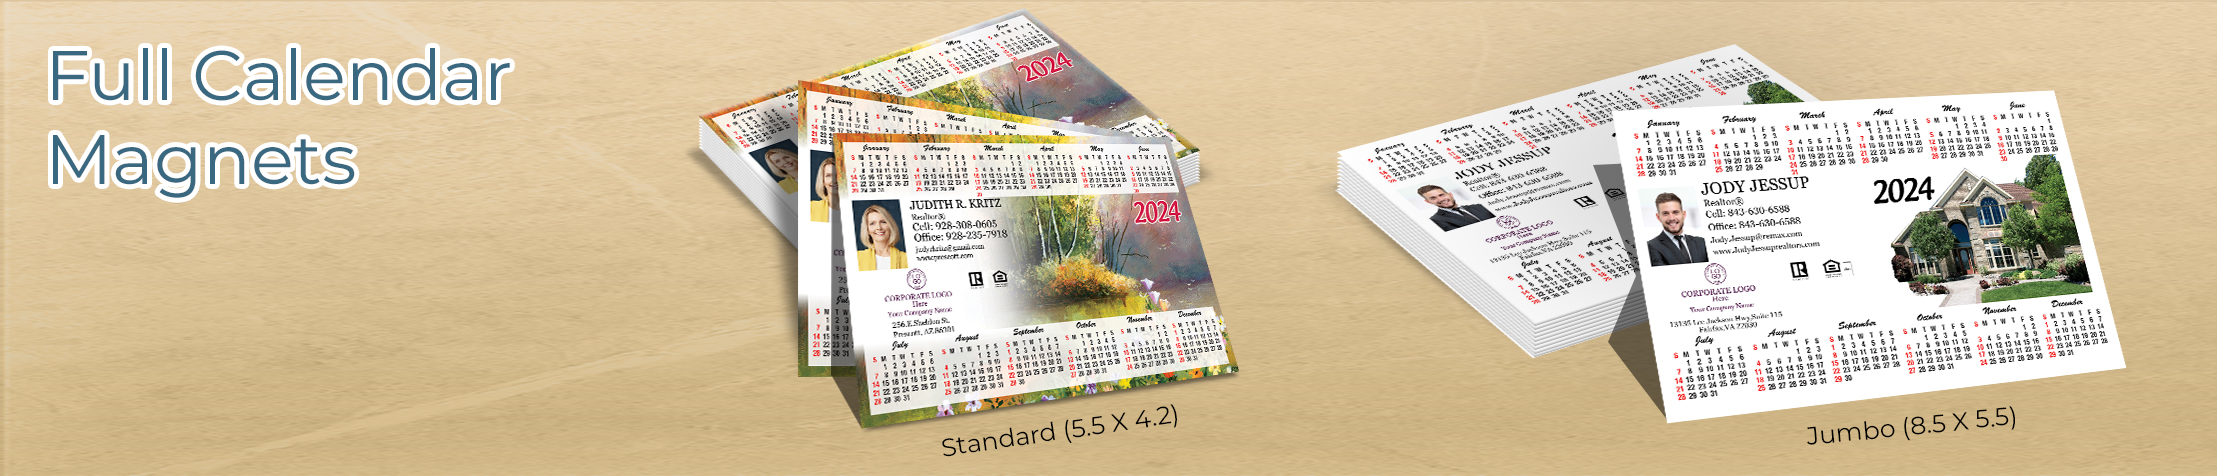 Berkshire Hathaway Real Estate Full Calendar Magnets - Berkshire Hathaway 2019 calendars in Standard or Jumbo Size | BestPrintBuy.com